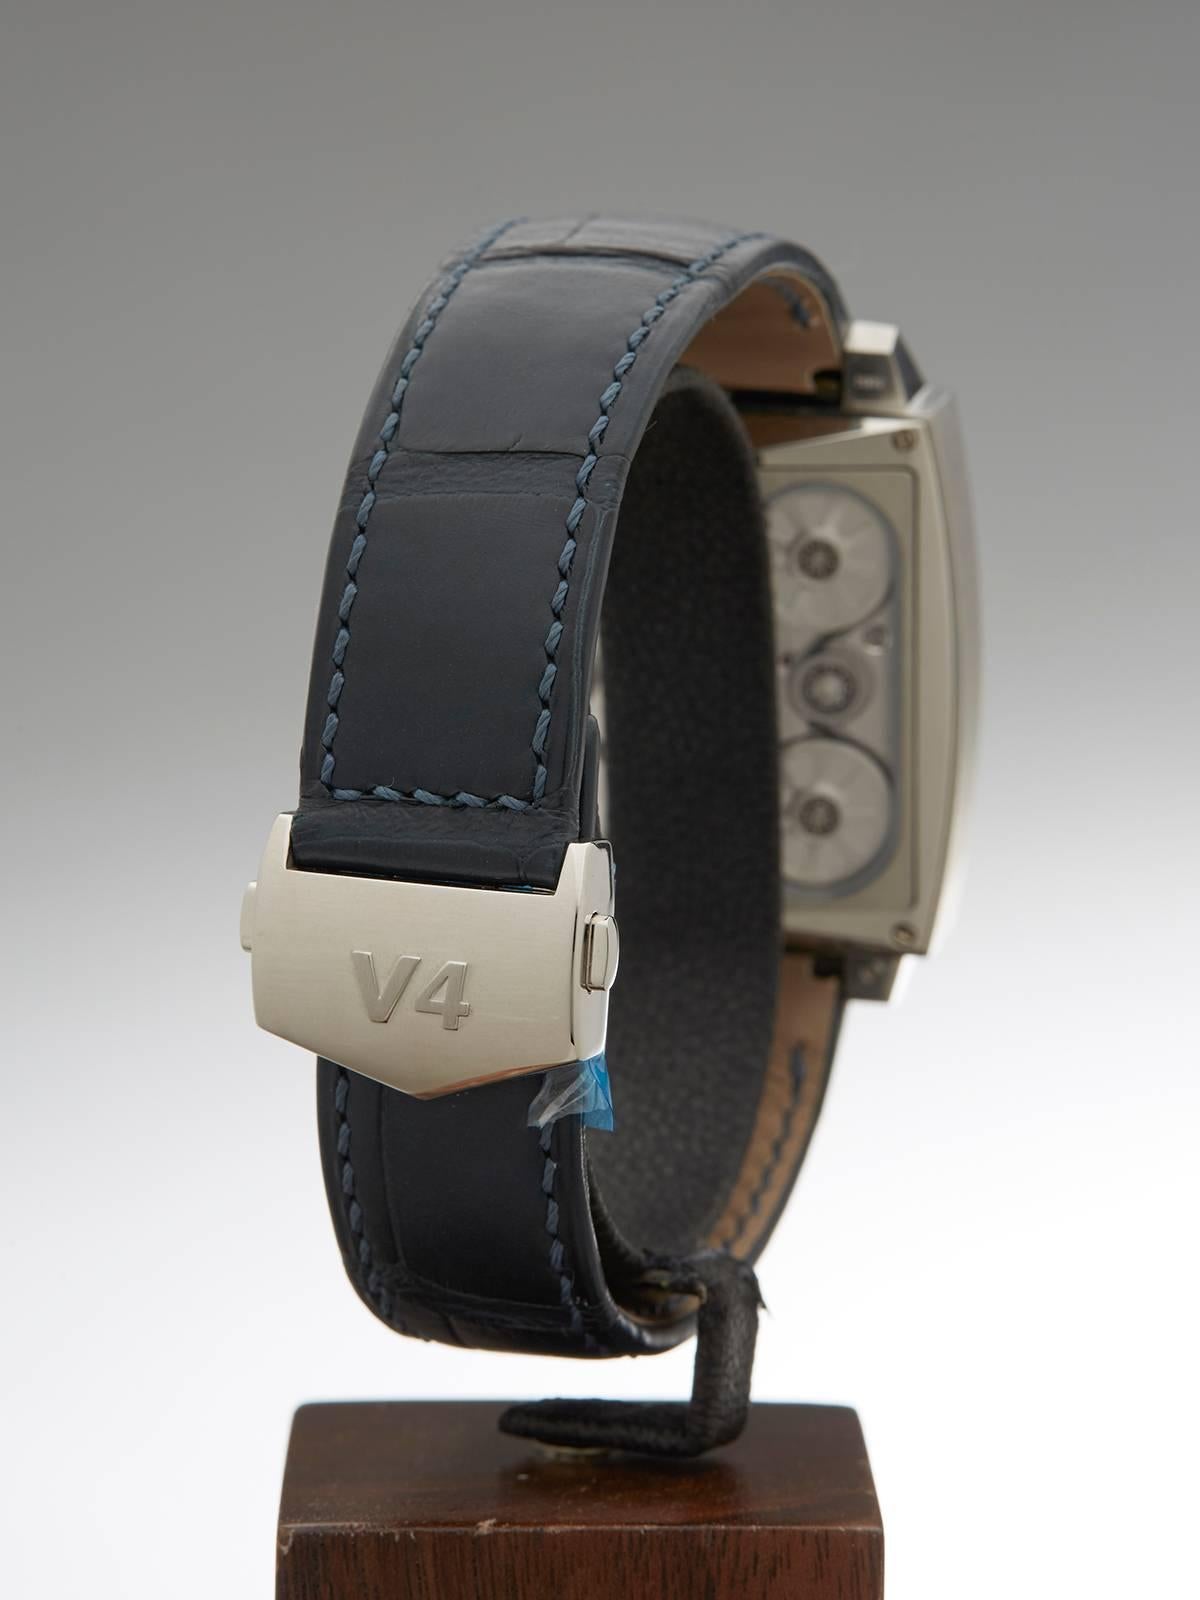  Tag Heuer Platinum Monaco Limited Edition V4 Automatic Wristwatch 2010 4